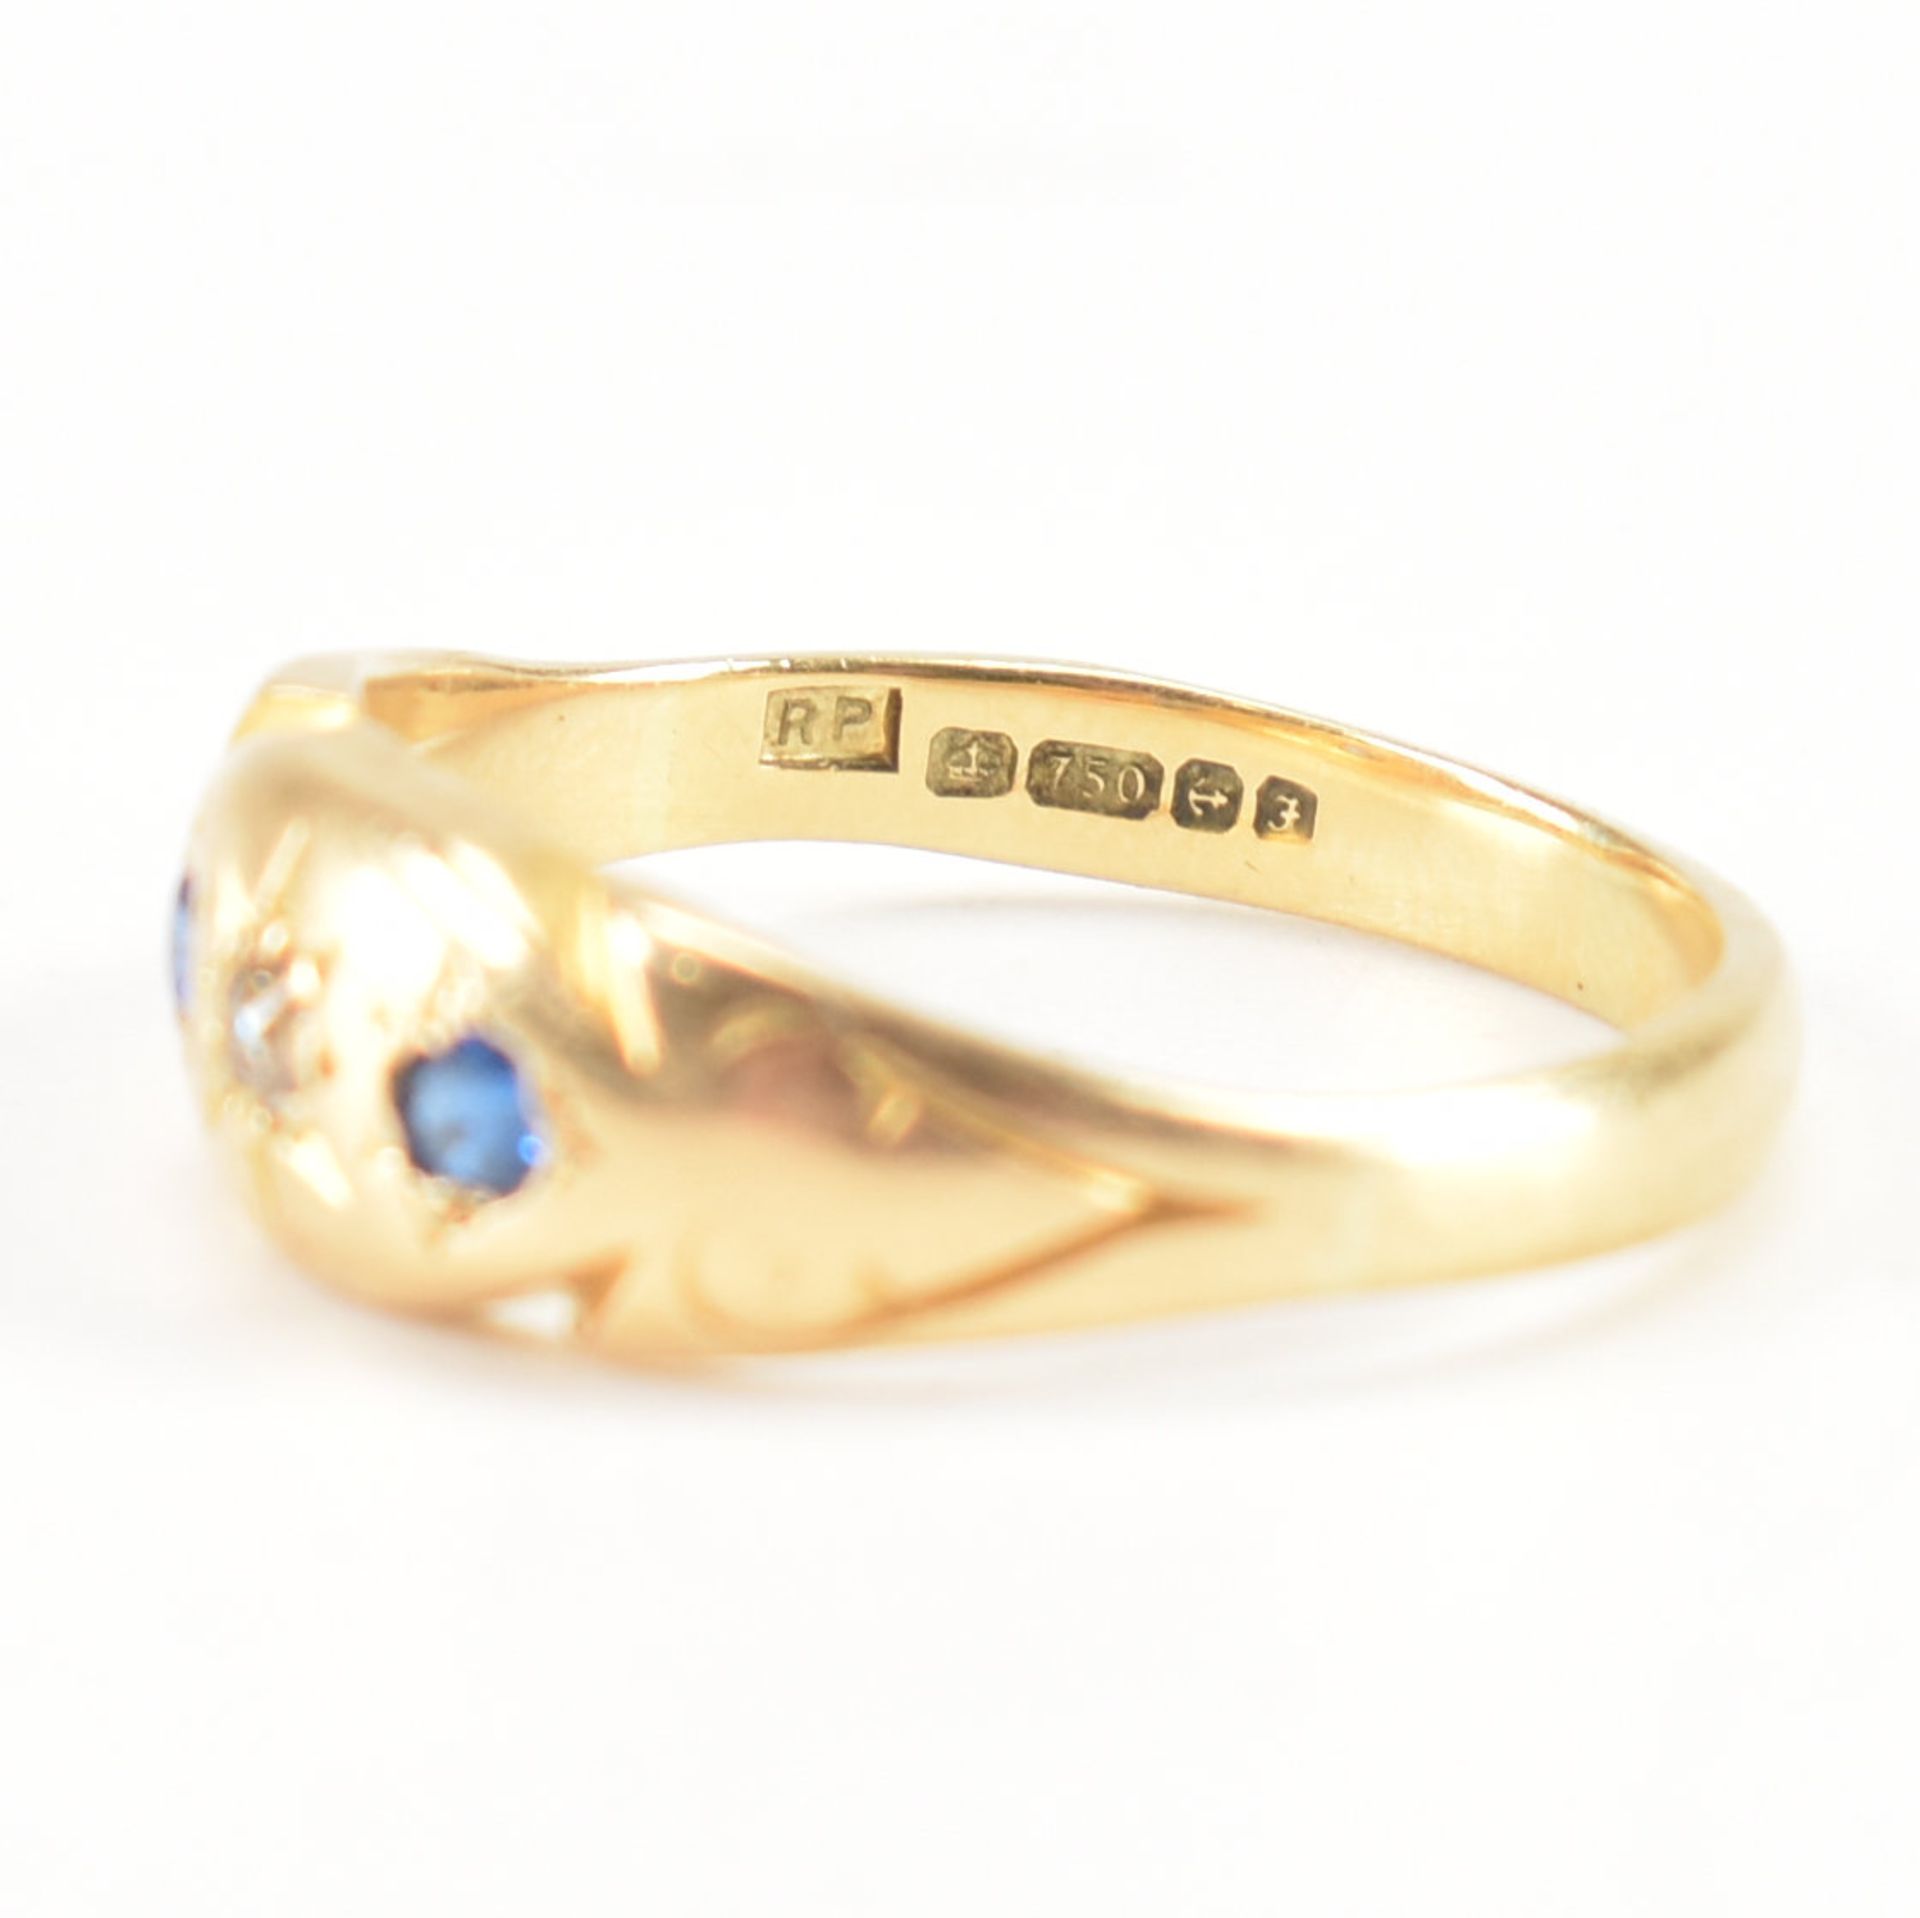 HALLMARKED 18CT GOLD DIAMOND & BLUE STONE RING - Image 7 of 9